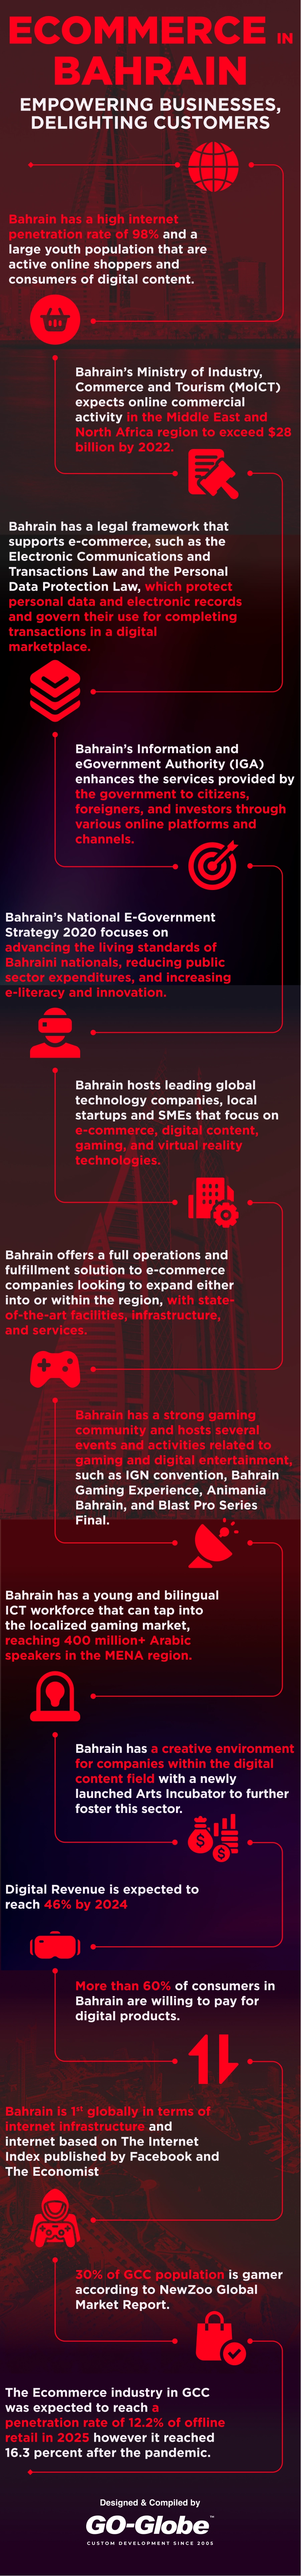 ecommerce_bahrain